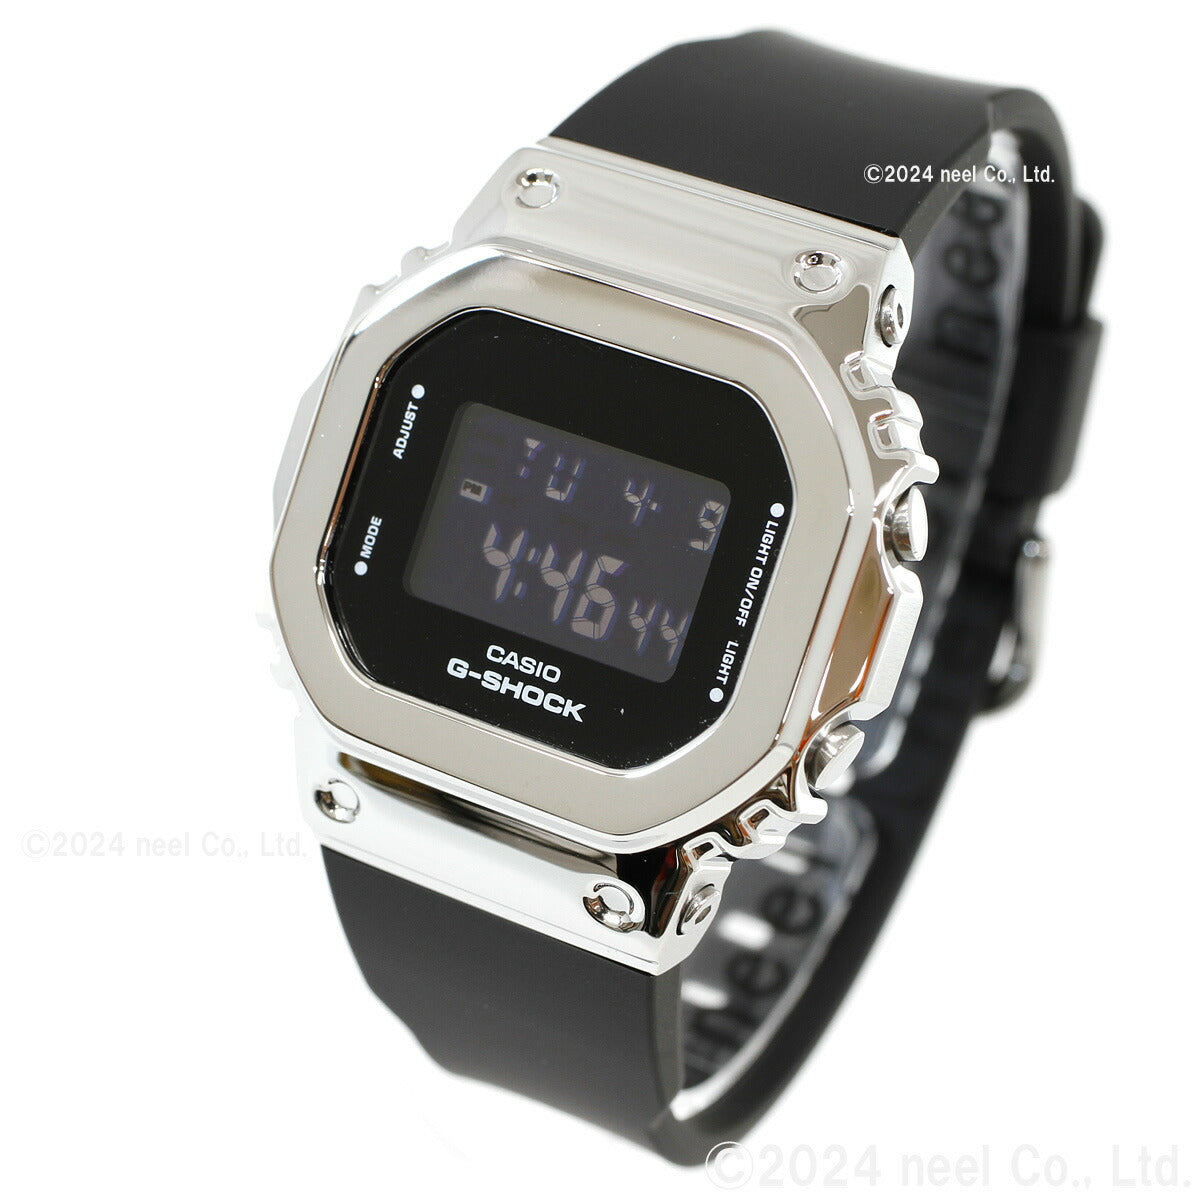 G-SHOCK カシオ Gショック CASIO デジタル 腕時計 メンズ レディース GM-S5600U-1JF ブラック シルバー メタルカバー コンパクトサイズ LEDバックライト